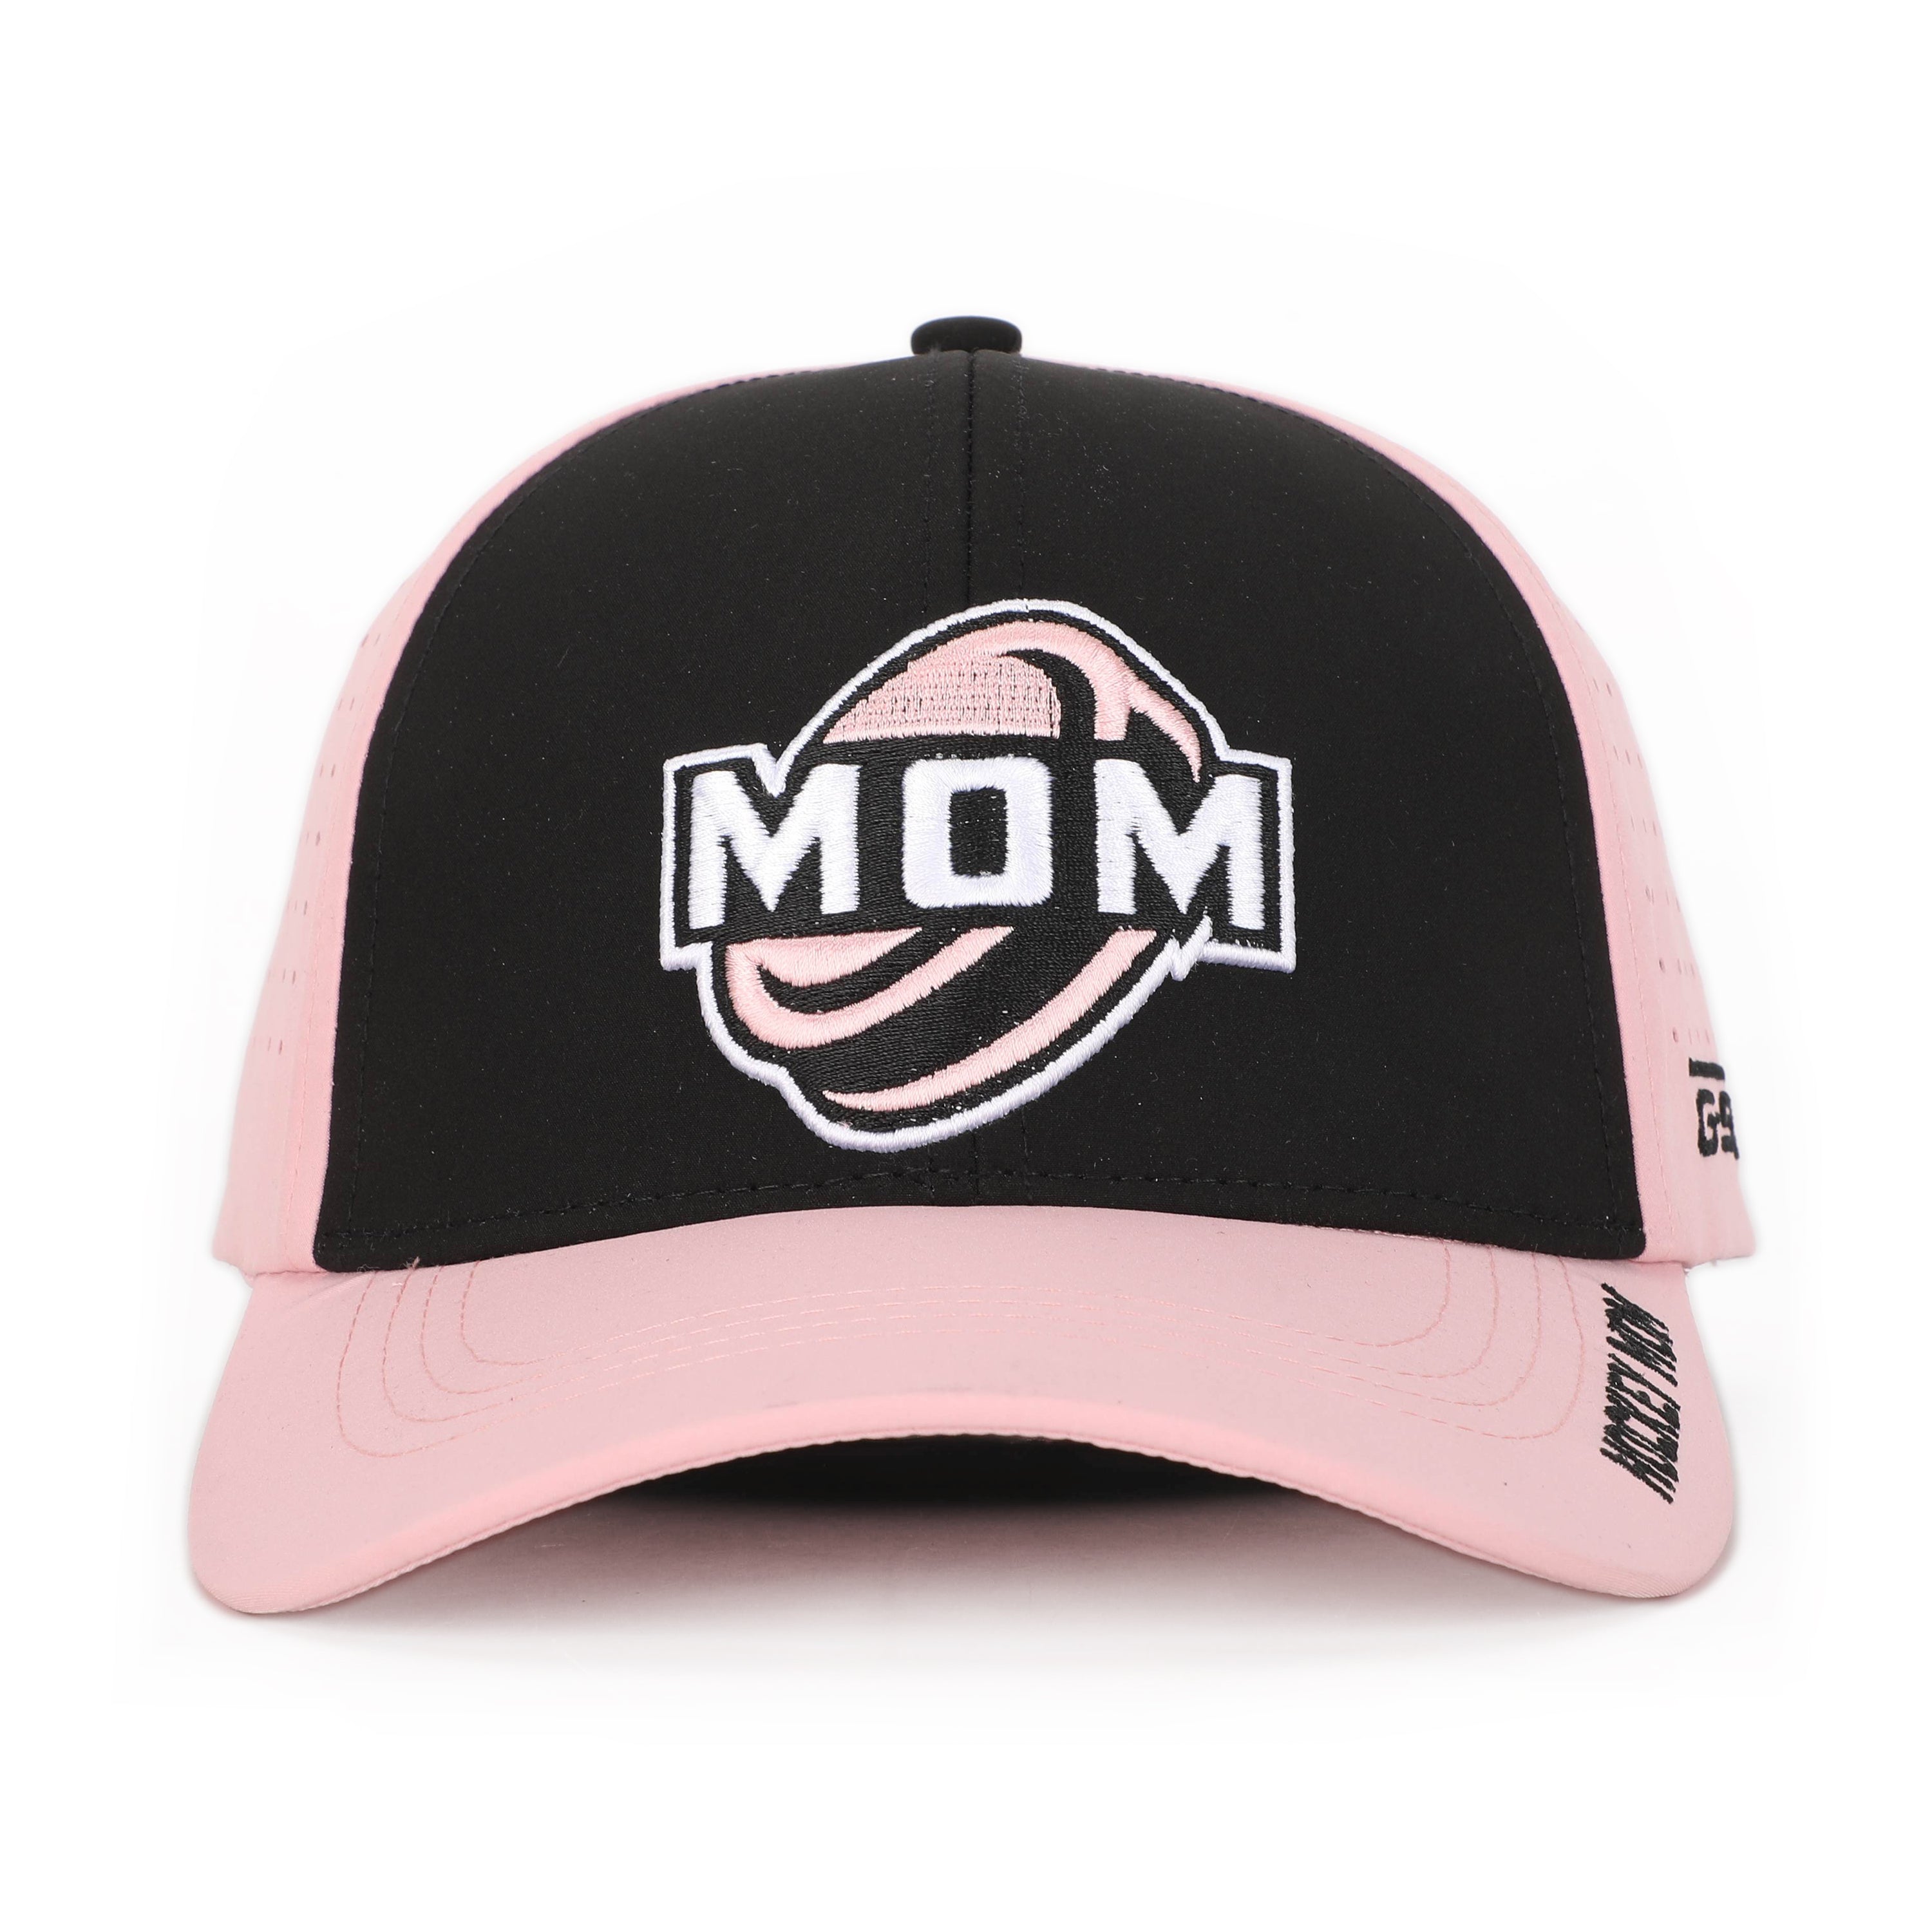 Gitch Sportswear Hockey Mom